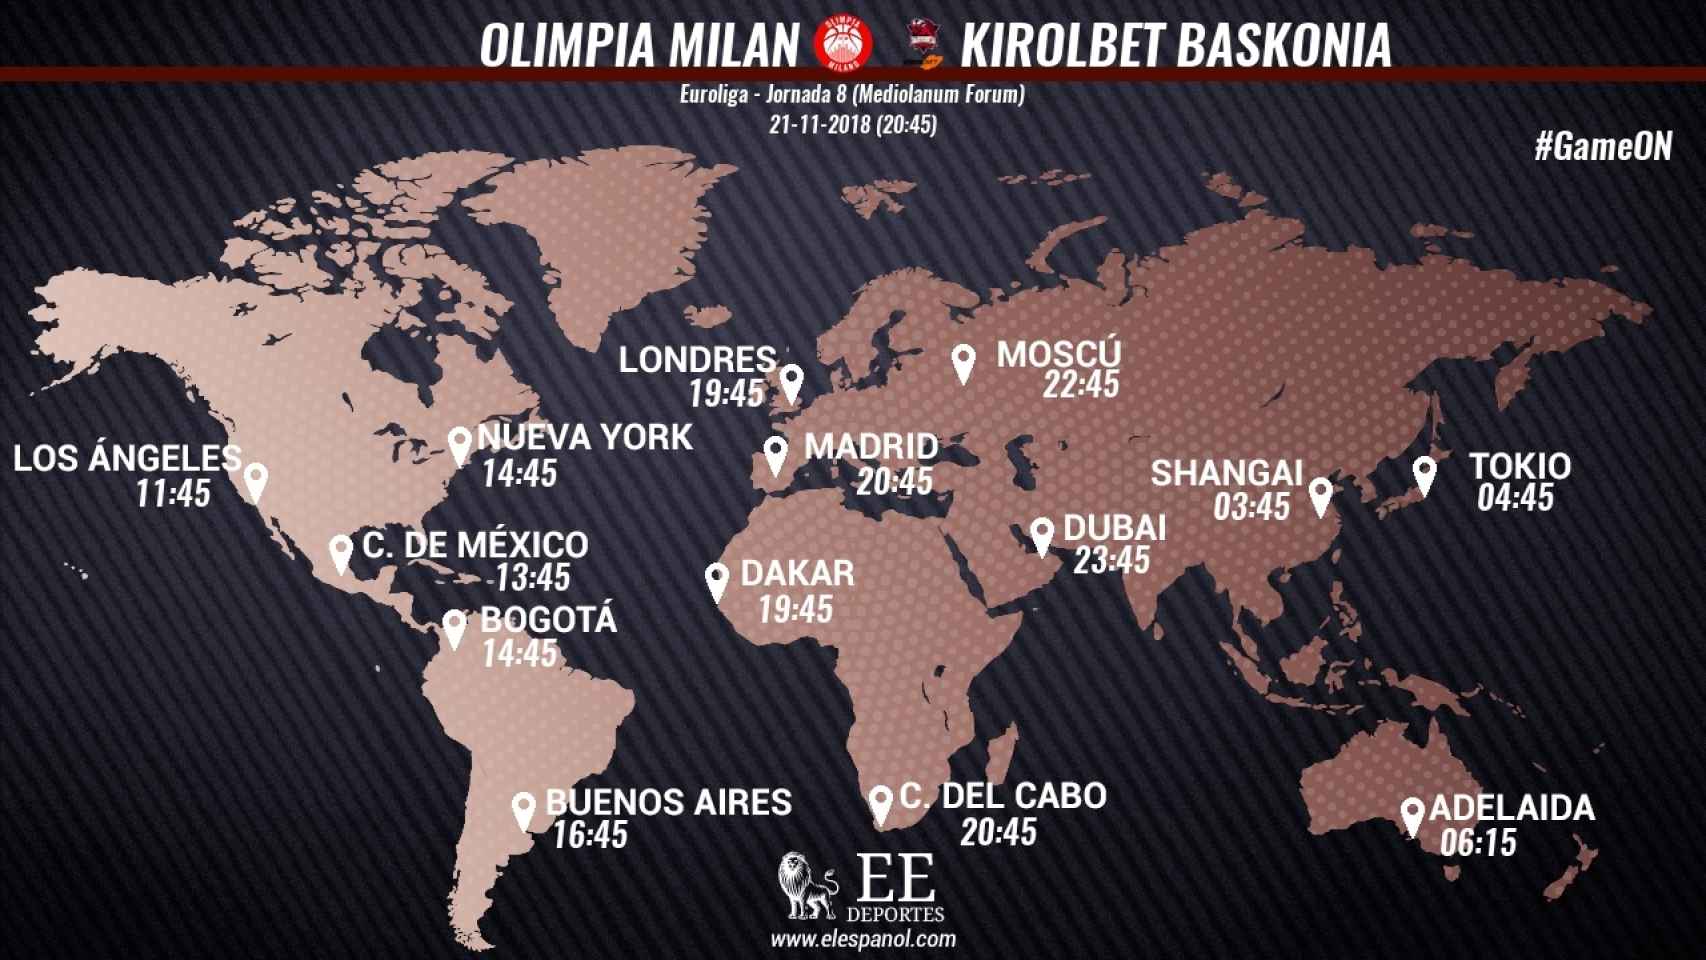 Horario del Olimpia Milan - Kirolbet Baskonia